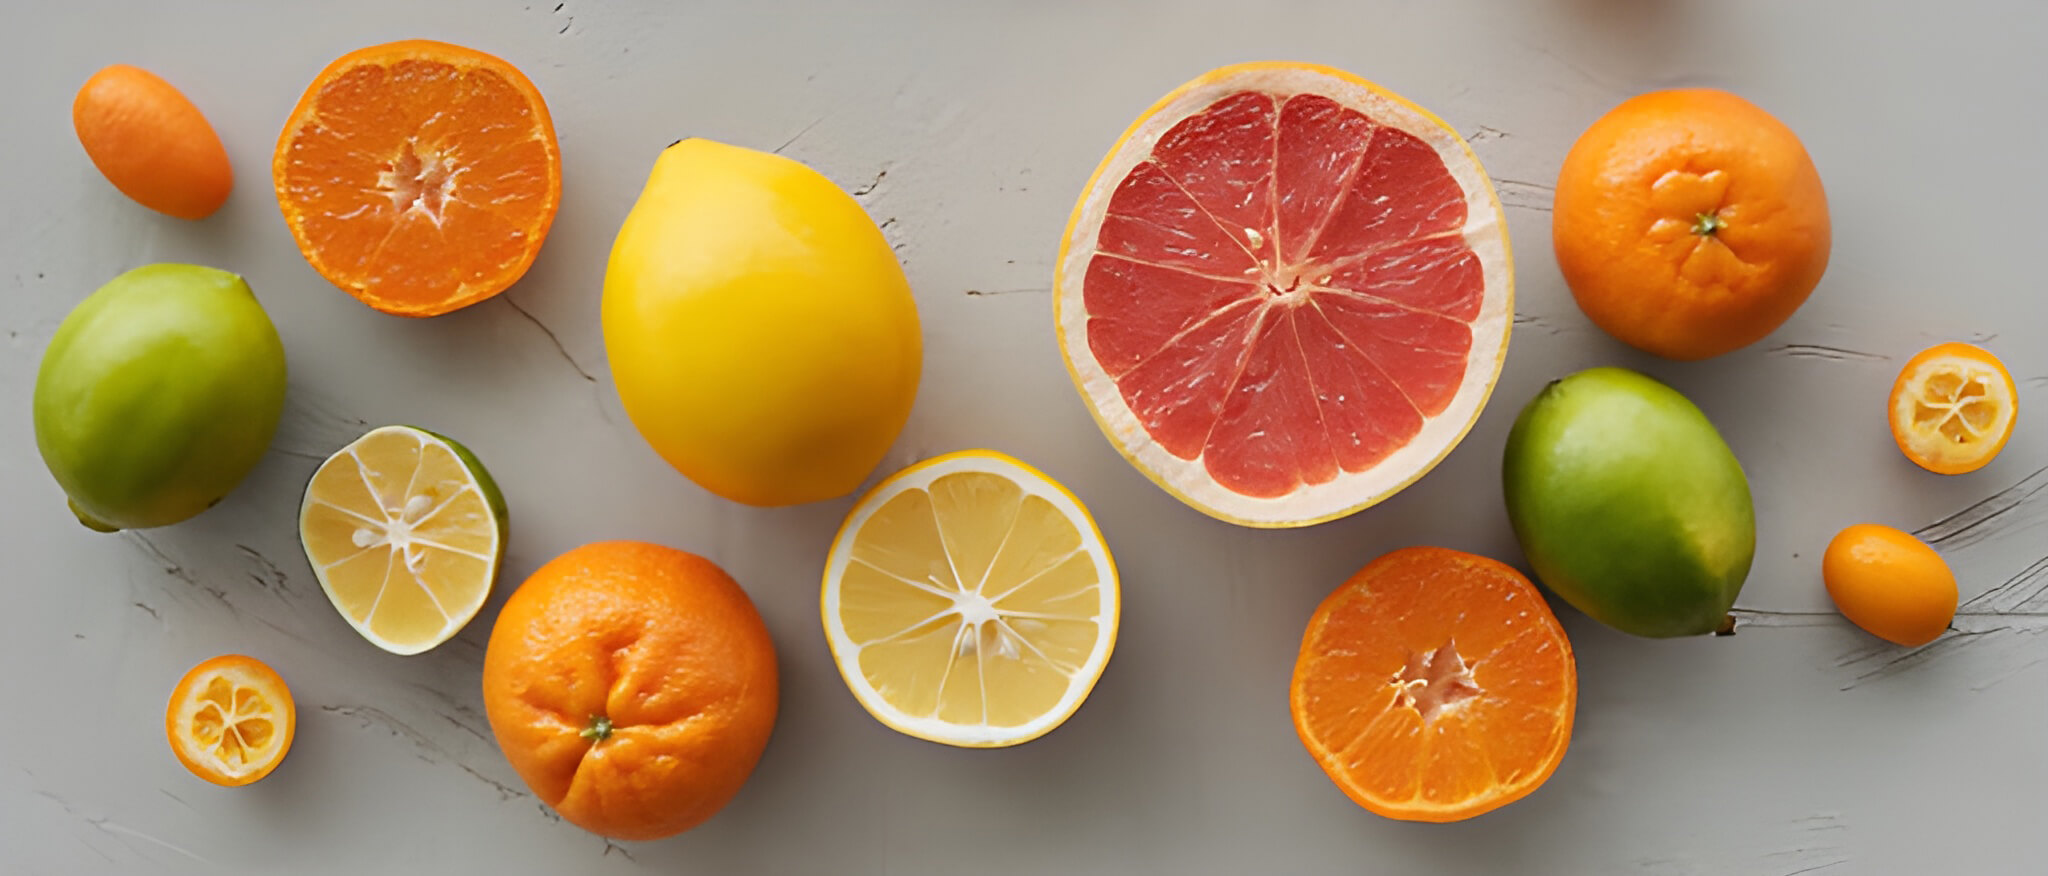 Citrus-Fruits-immune-boosting-foods-ingredients